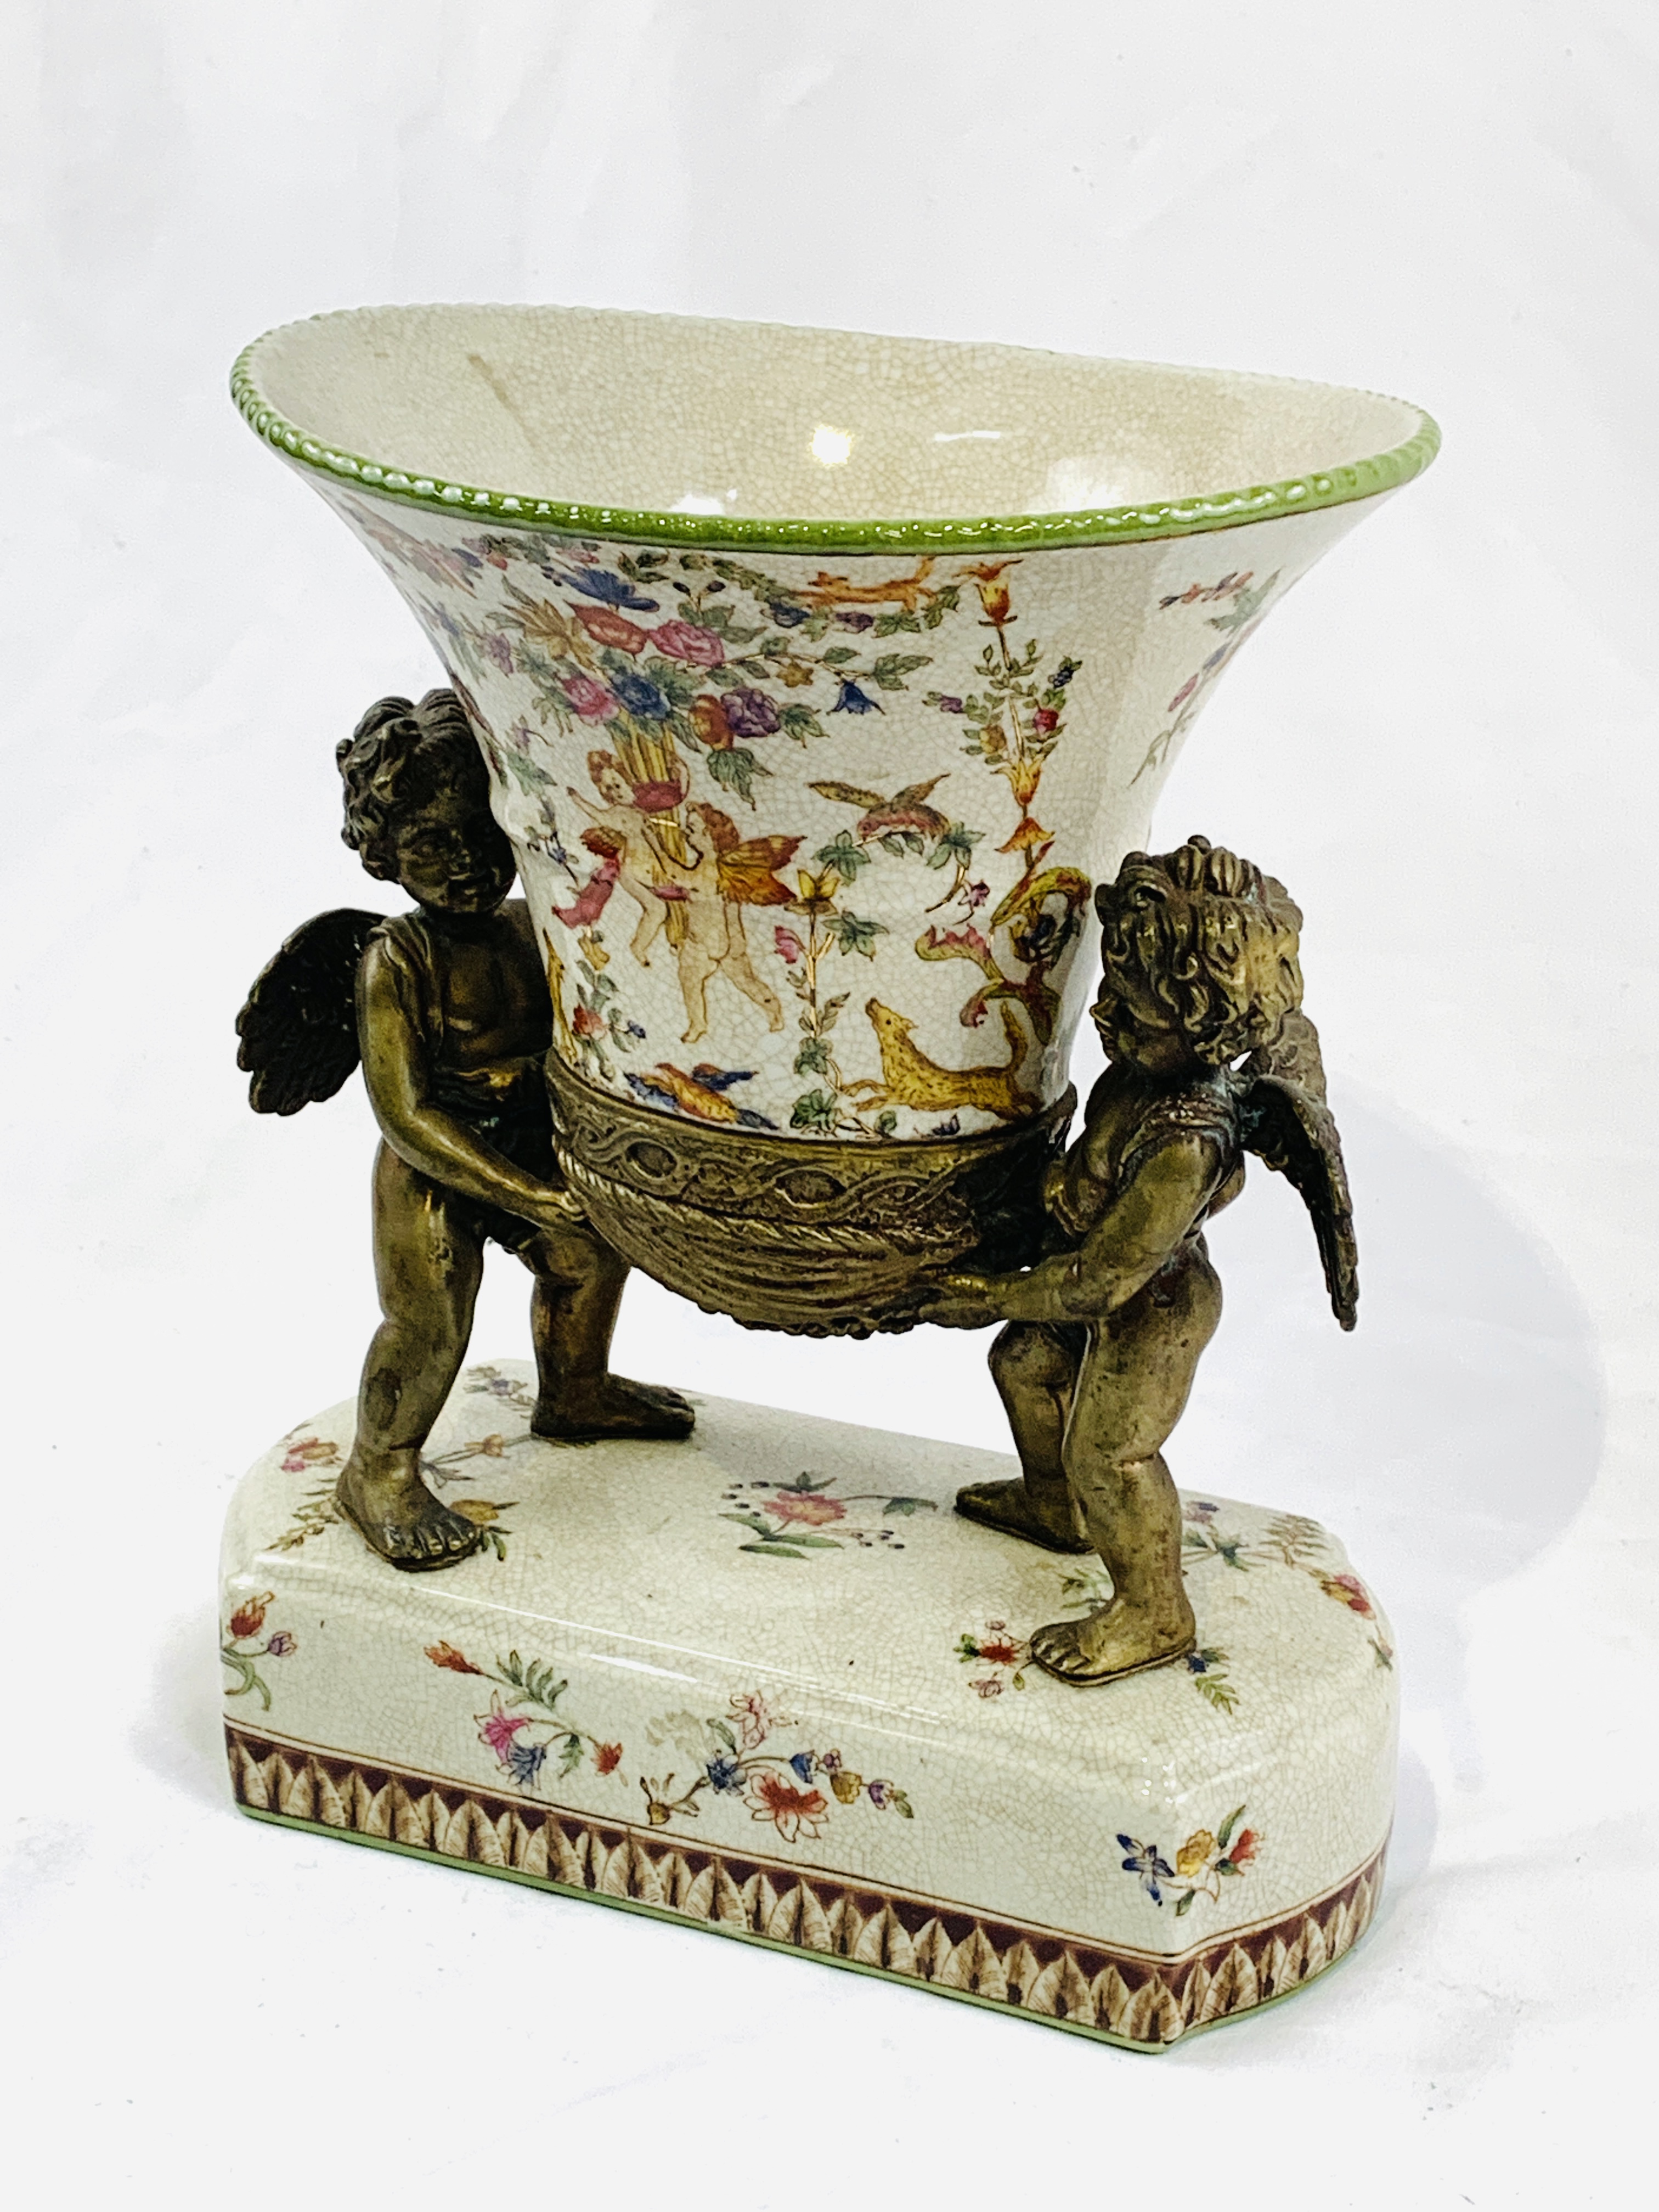 Decorative ceramic centrepiece with mounted ormolu cherubs. - Image 2 of 2